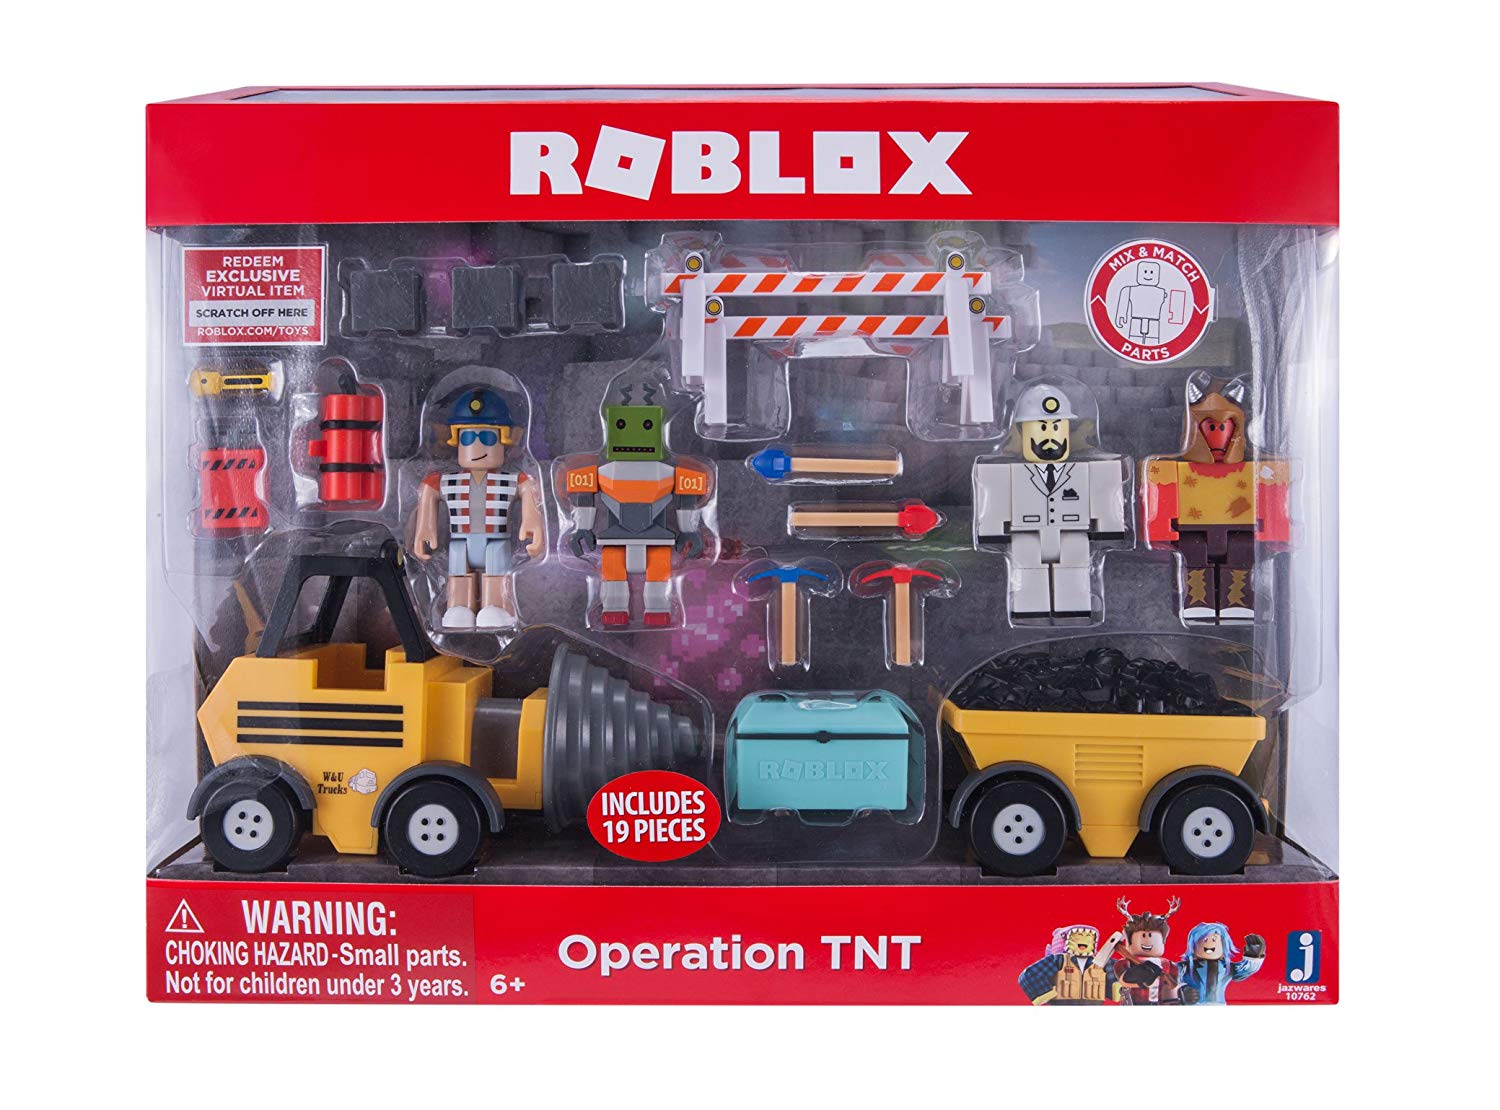 15 Best Roblox Toys The Ultimate List 2021 Heavy Com - jailbreak reddit roblox